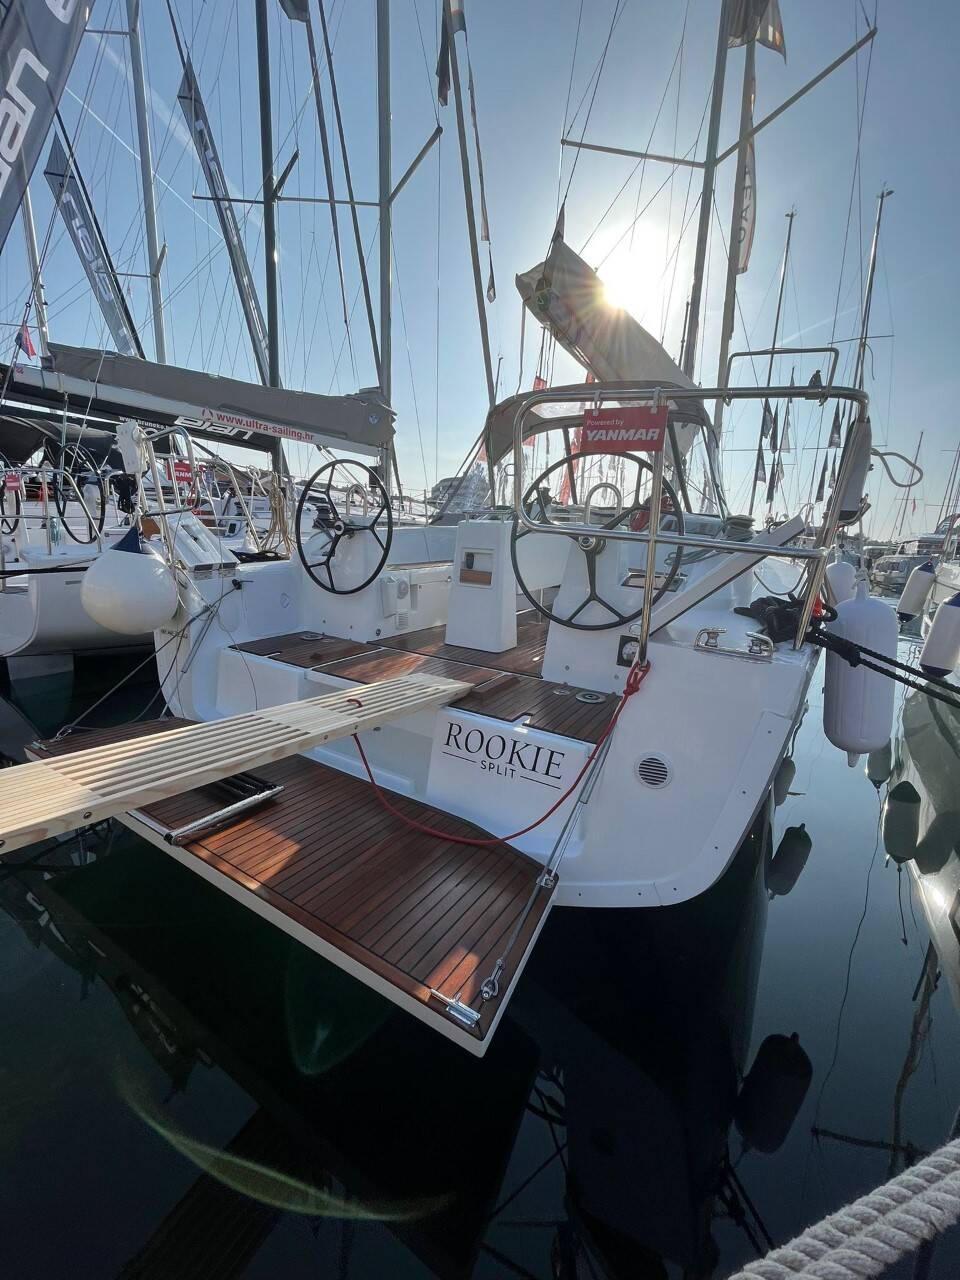 Sailing yacht Oceanis 34.1 Rookie